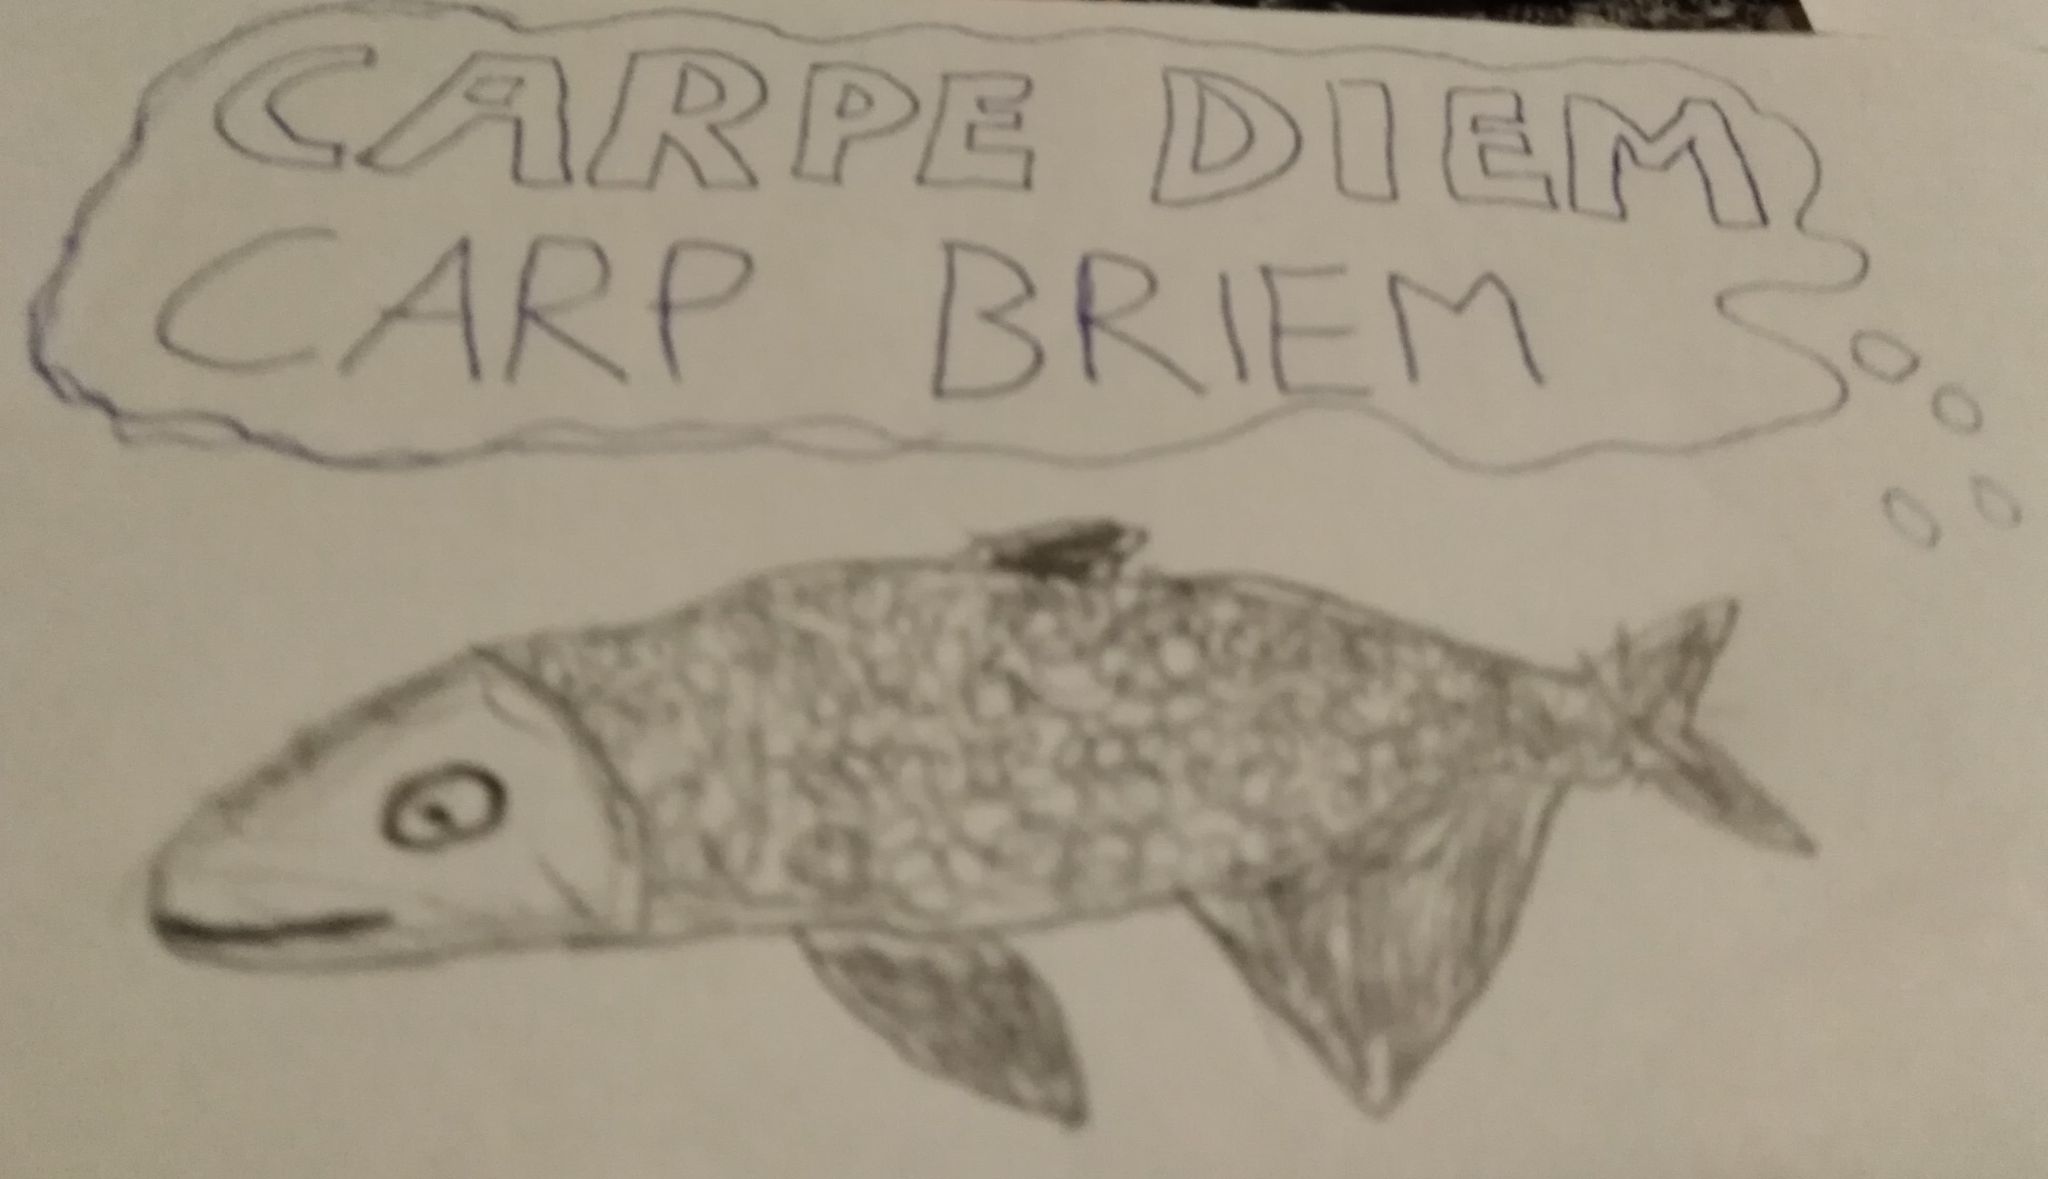 Carpe Diem, Carp Briem -a FishBlade RPG